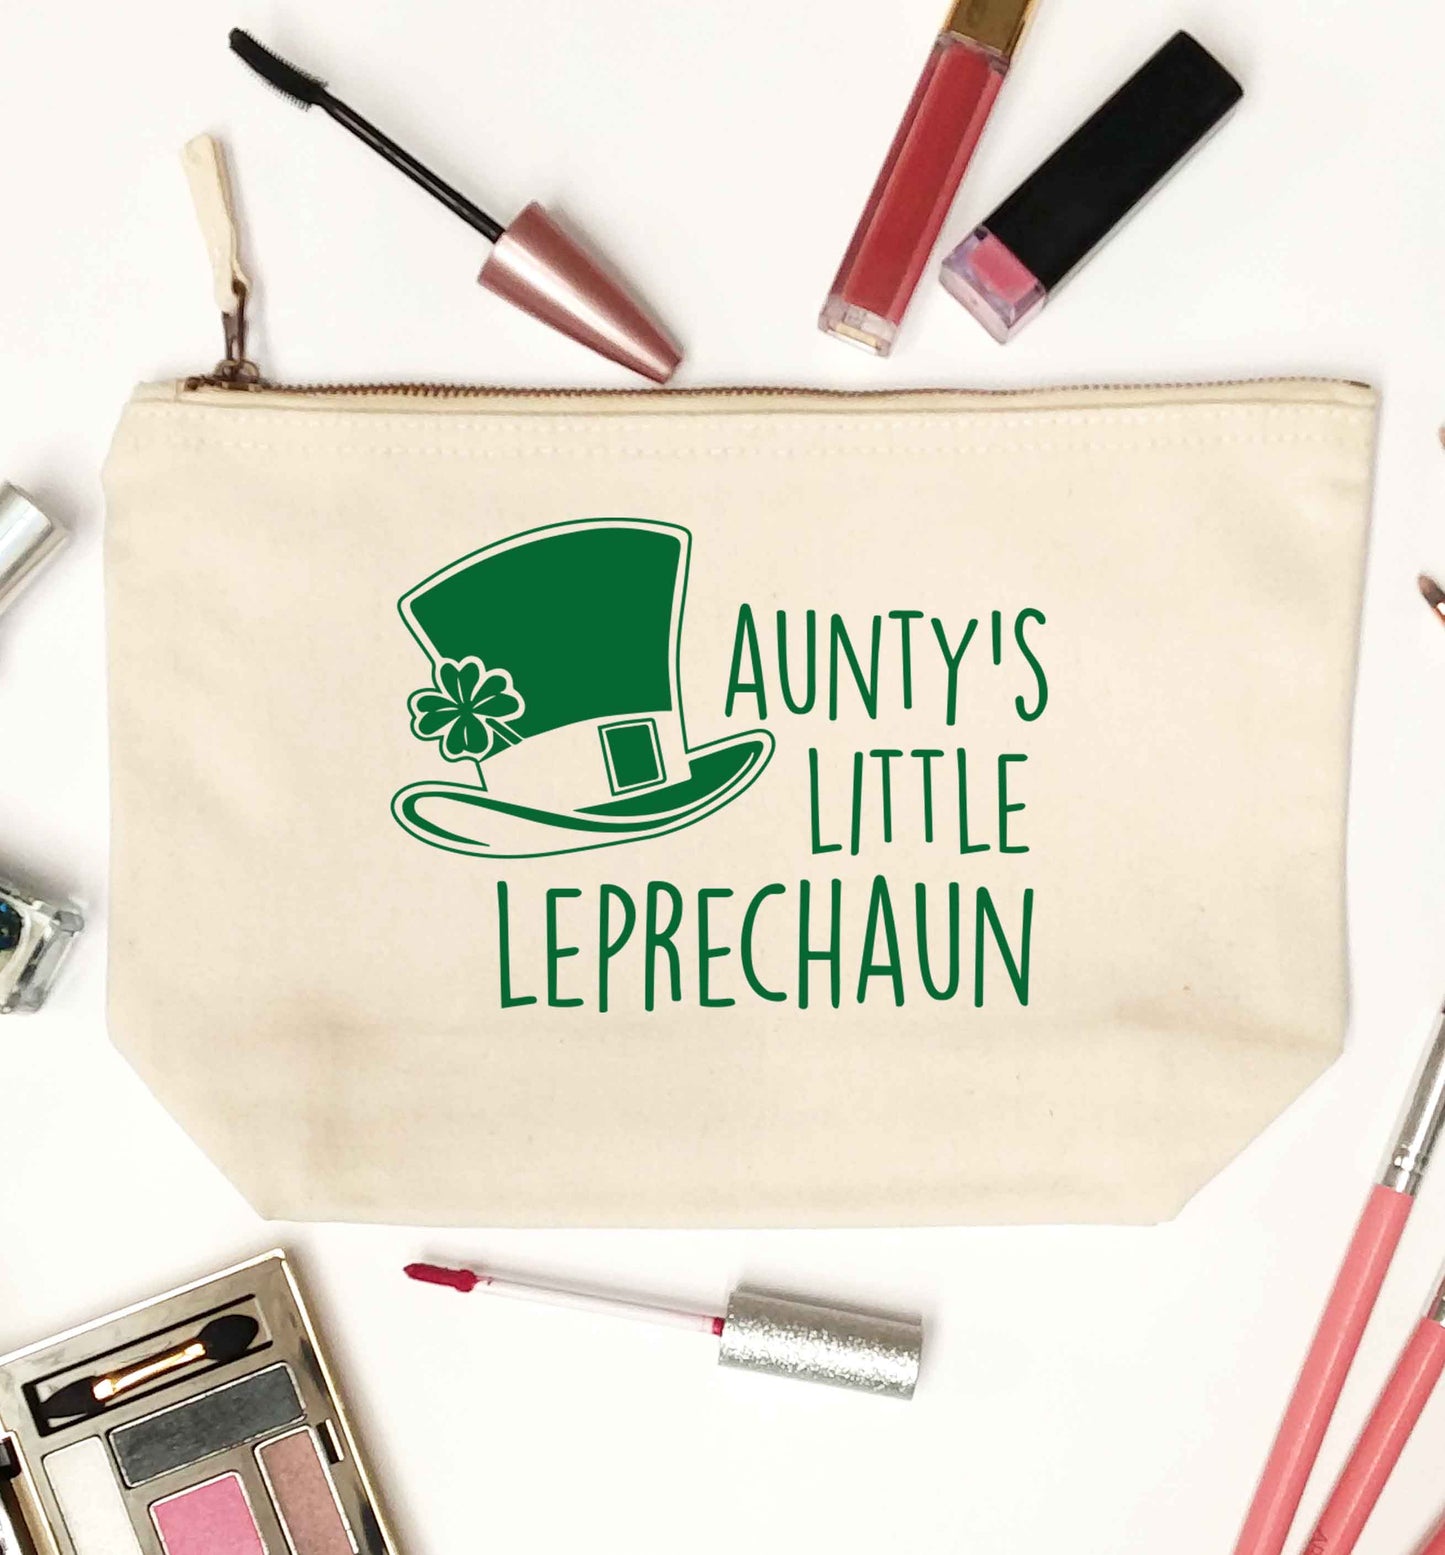 Aunty's little leprechaun natural makeup bag